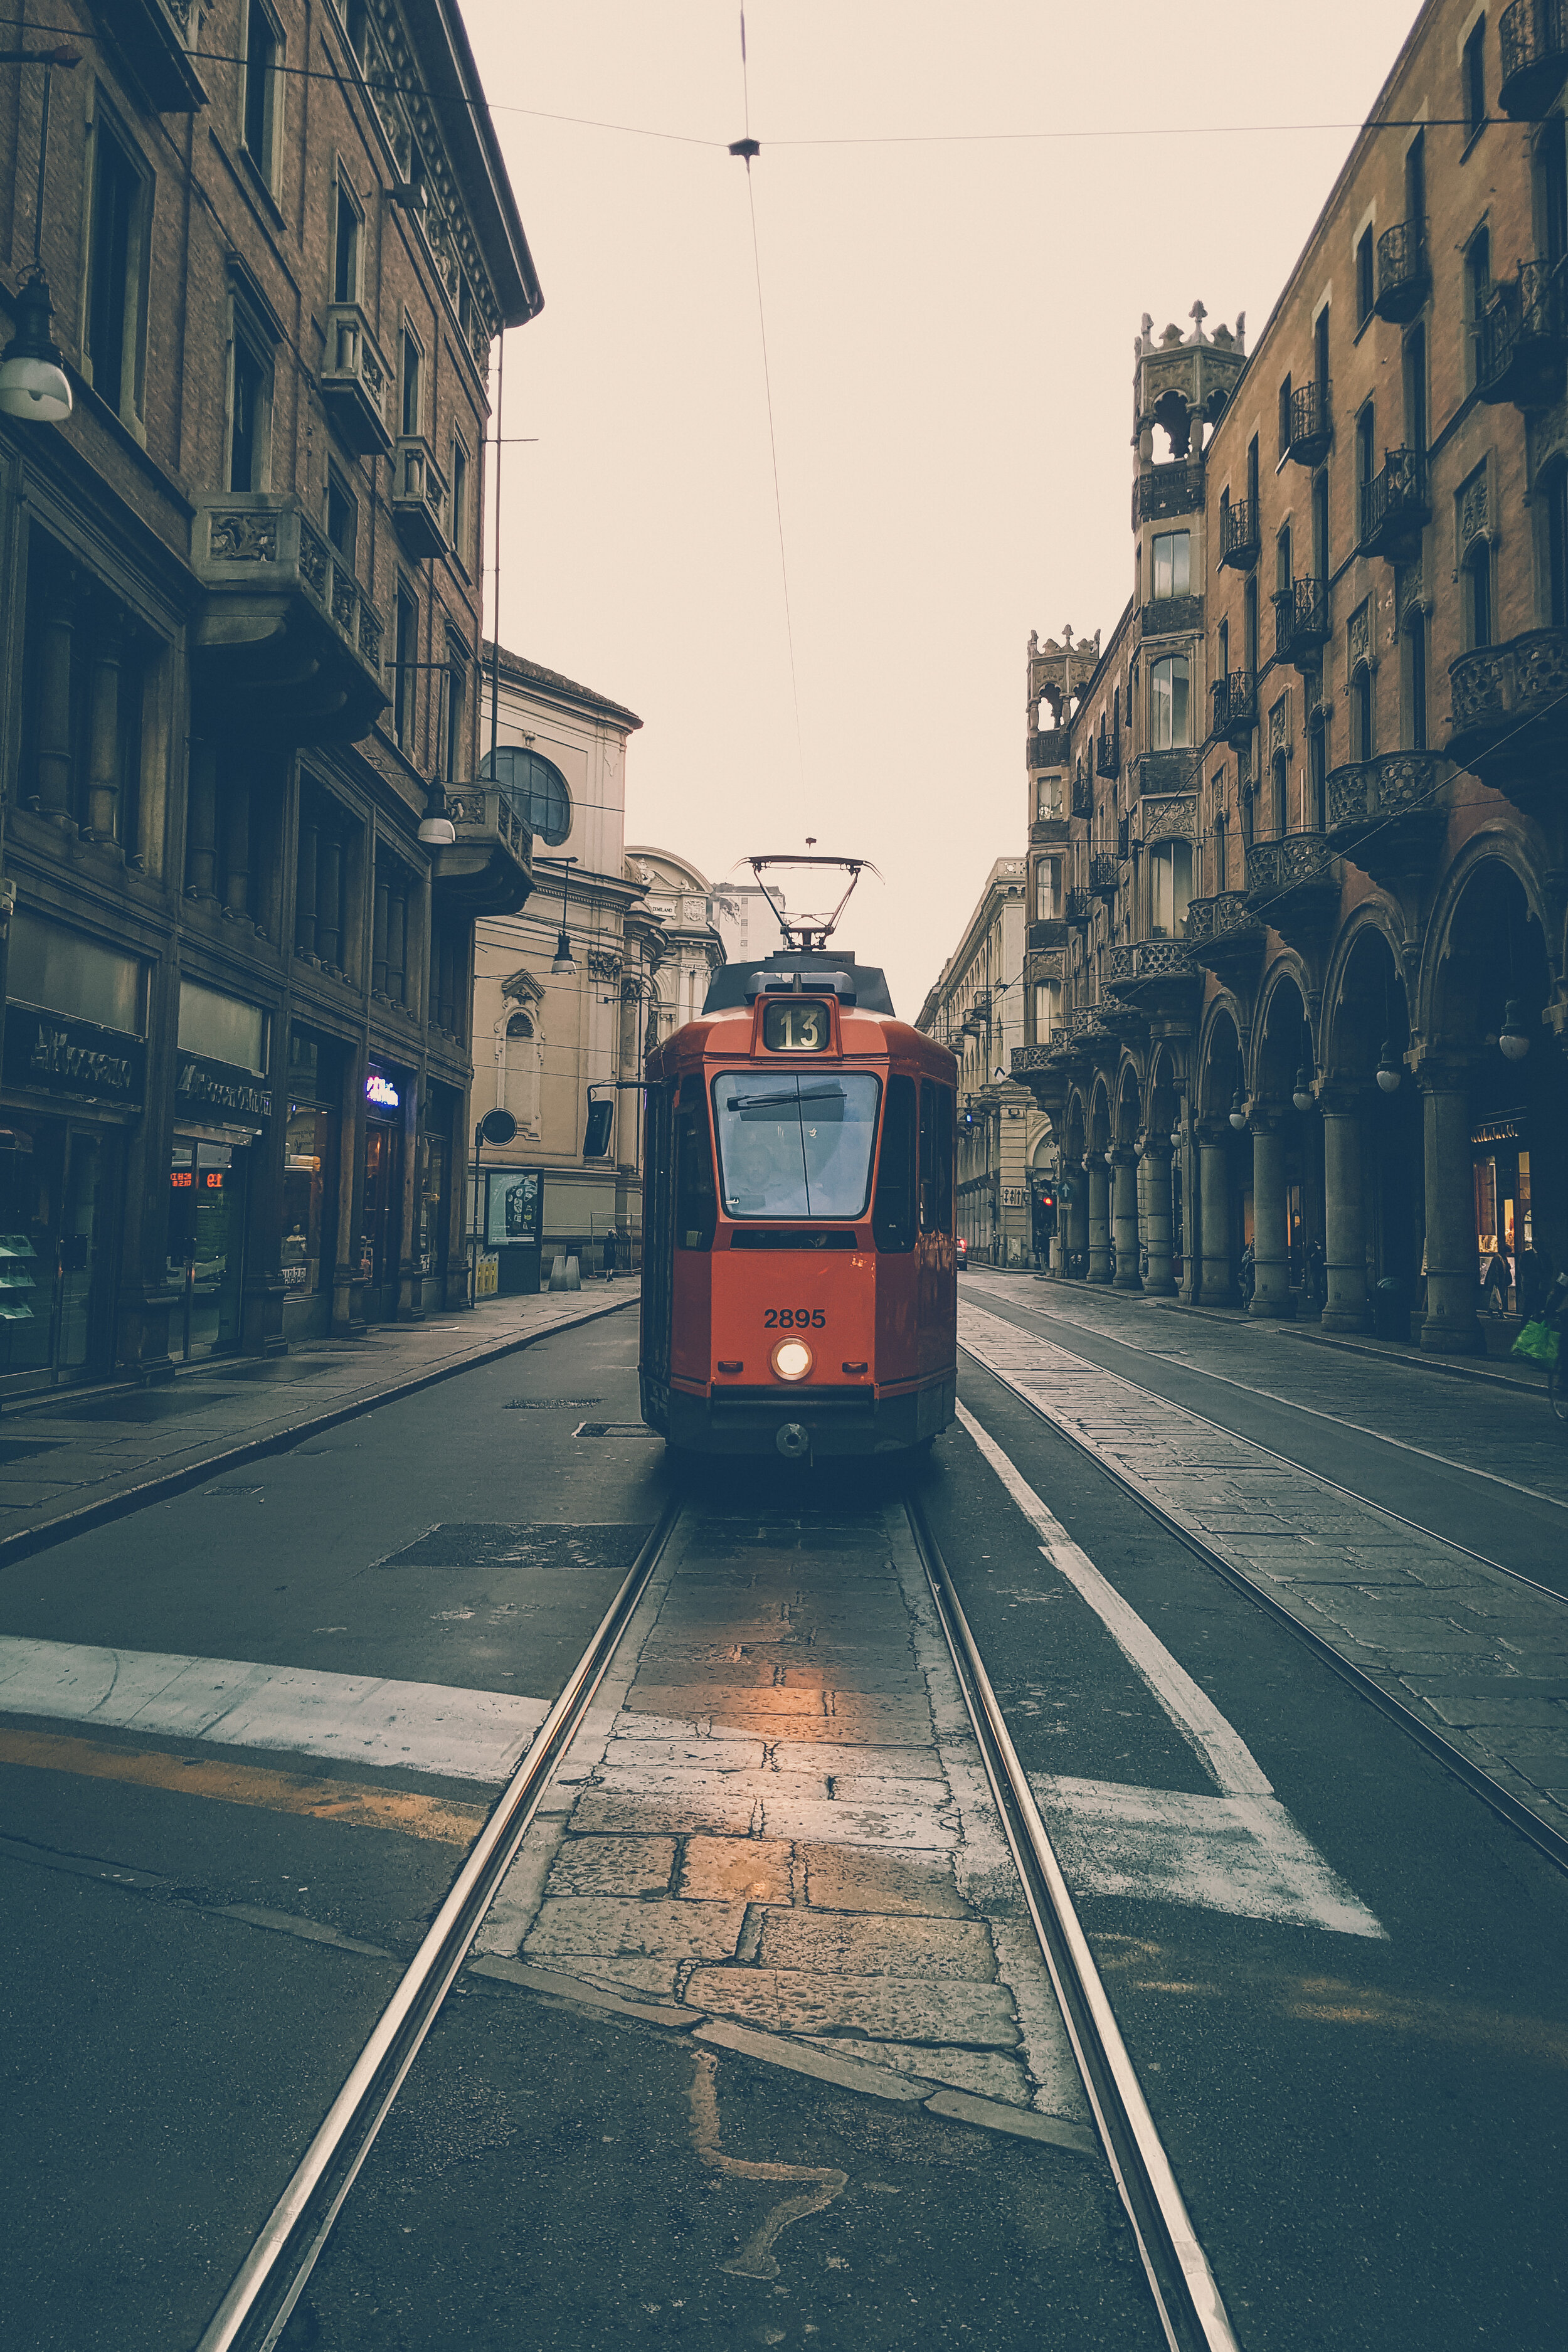 Vintage trams of Turin